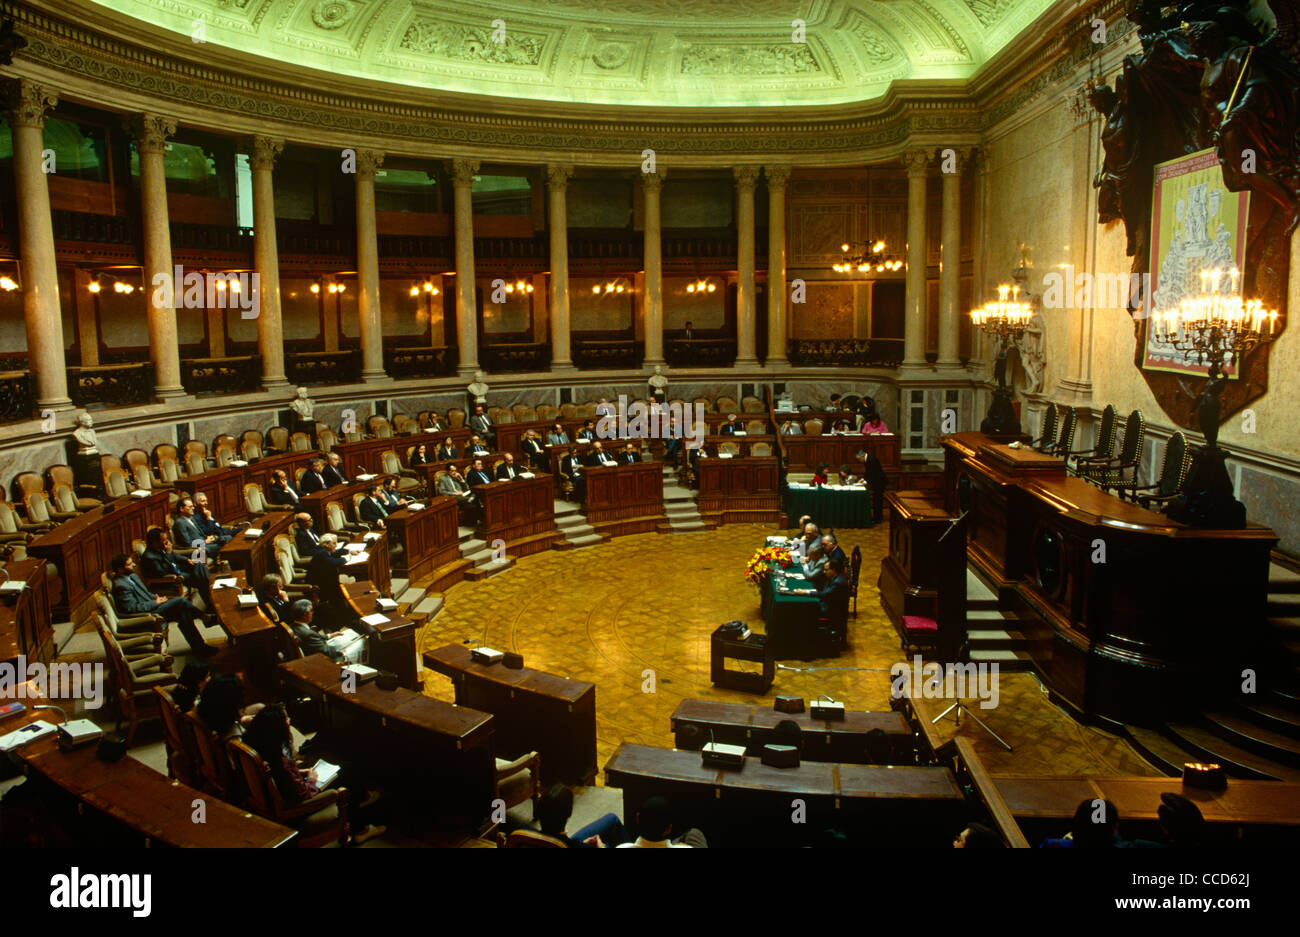 The Portuguese parliament in session from inside the Palacio de Sao Bento in Estrela District, Lisbon. Stock Photo